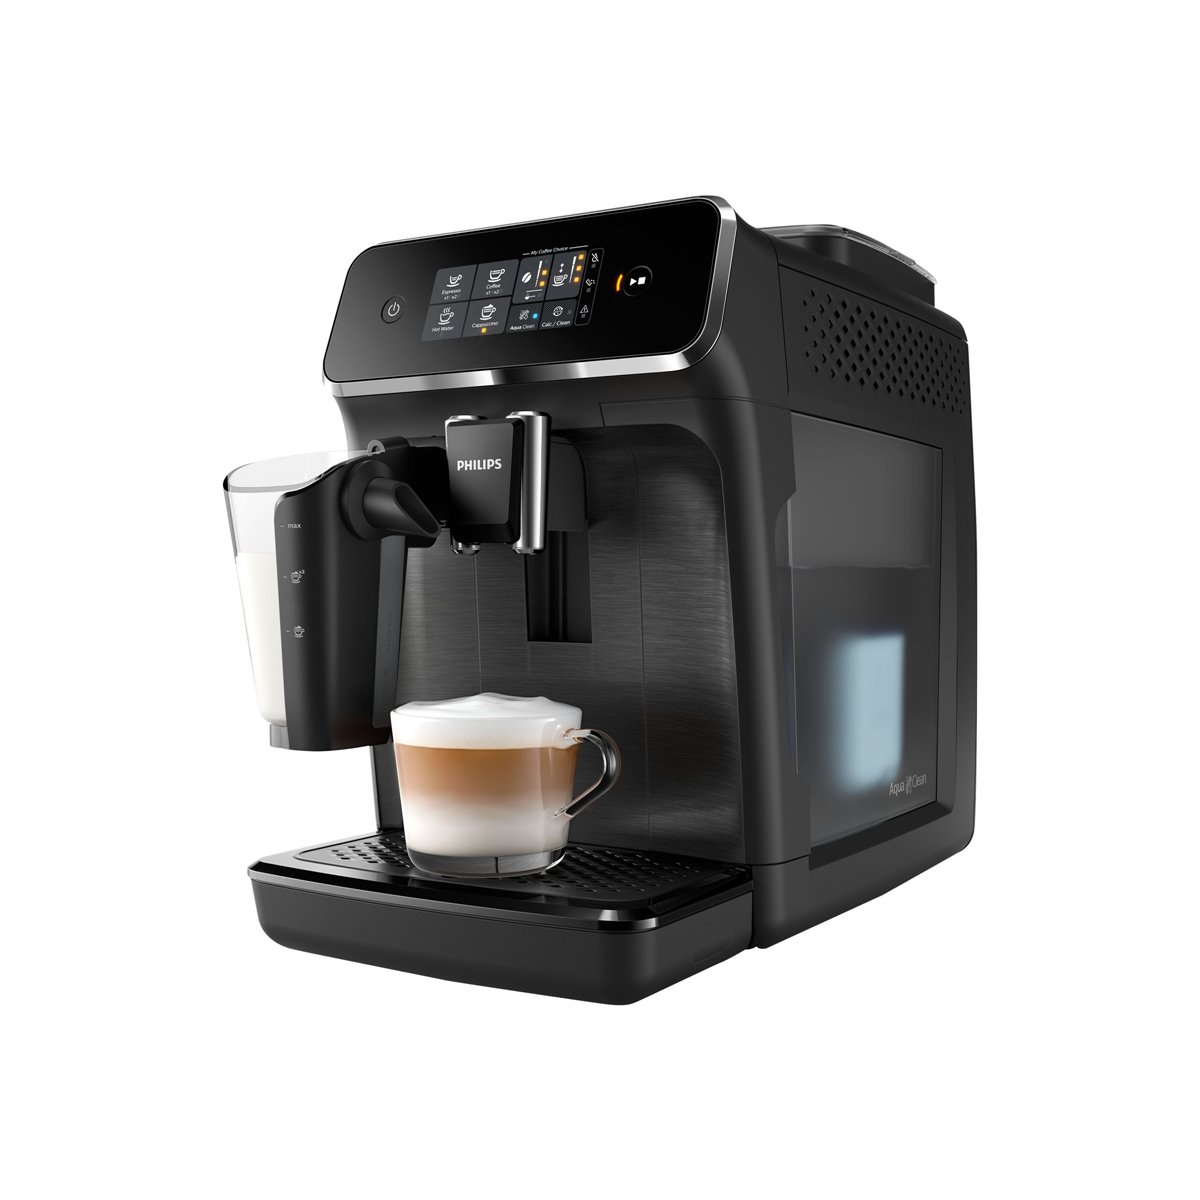 Philips Series 2200 EP2230/10 - Espresso machine - 1.8 L - Coffee beans - Built-in grinder - 1500 W - Black